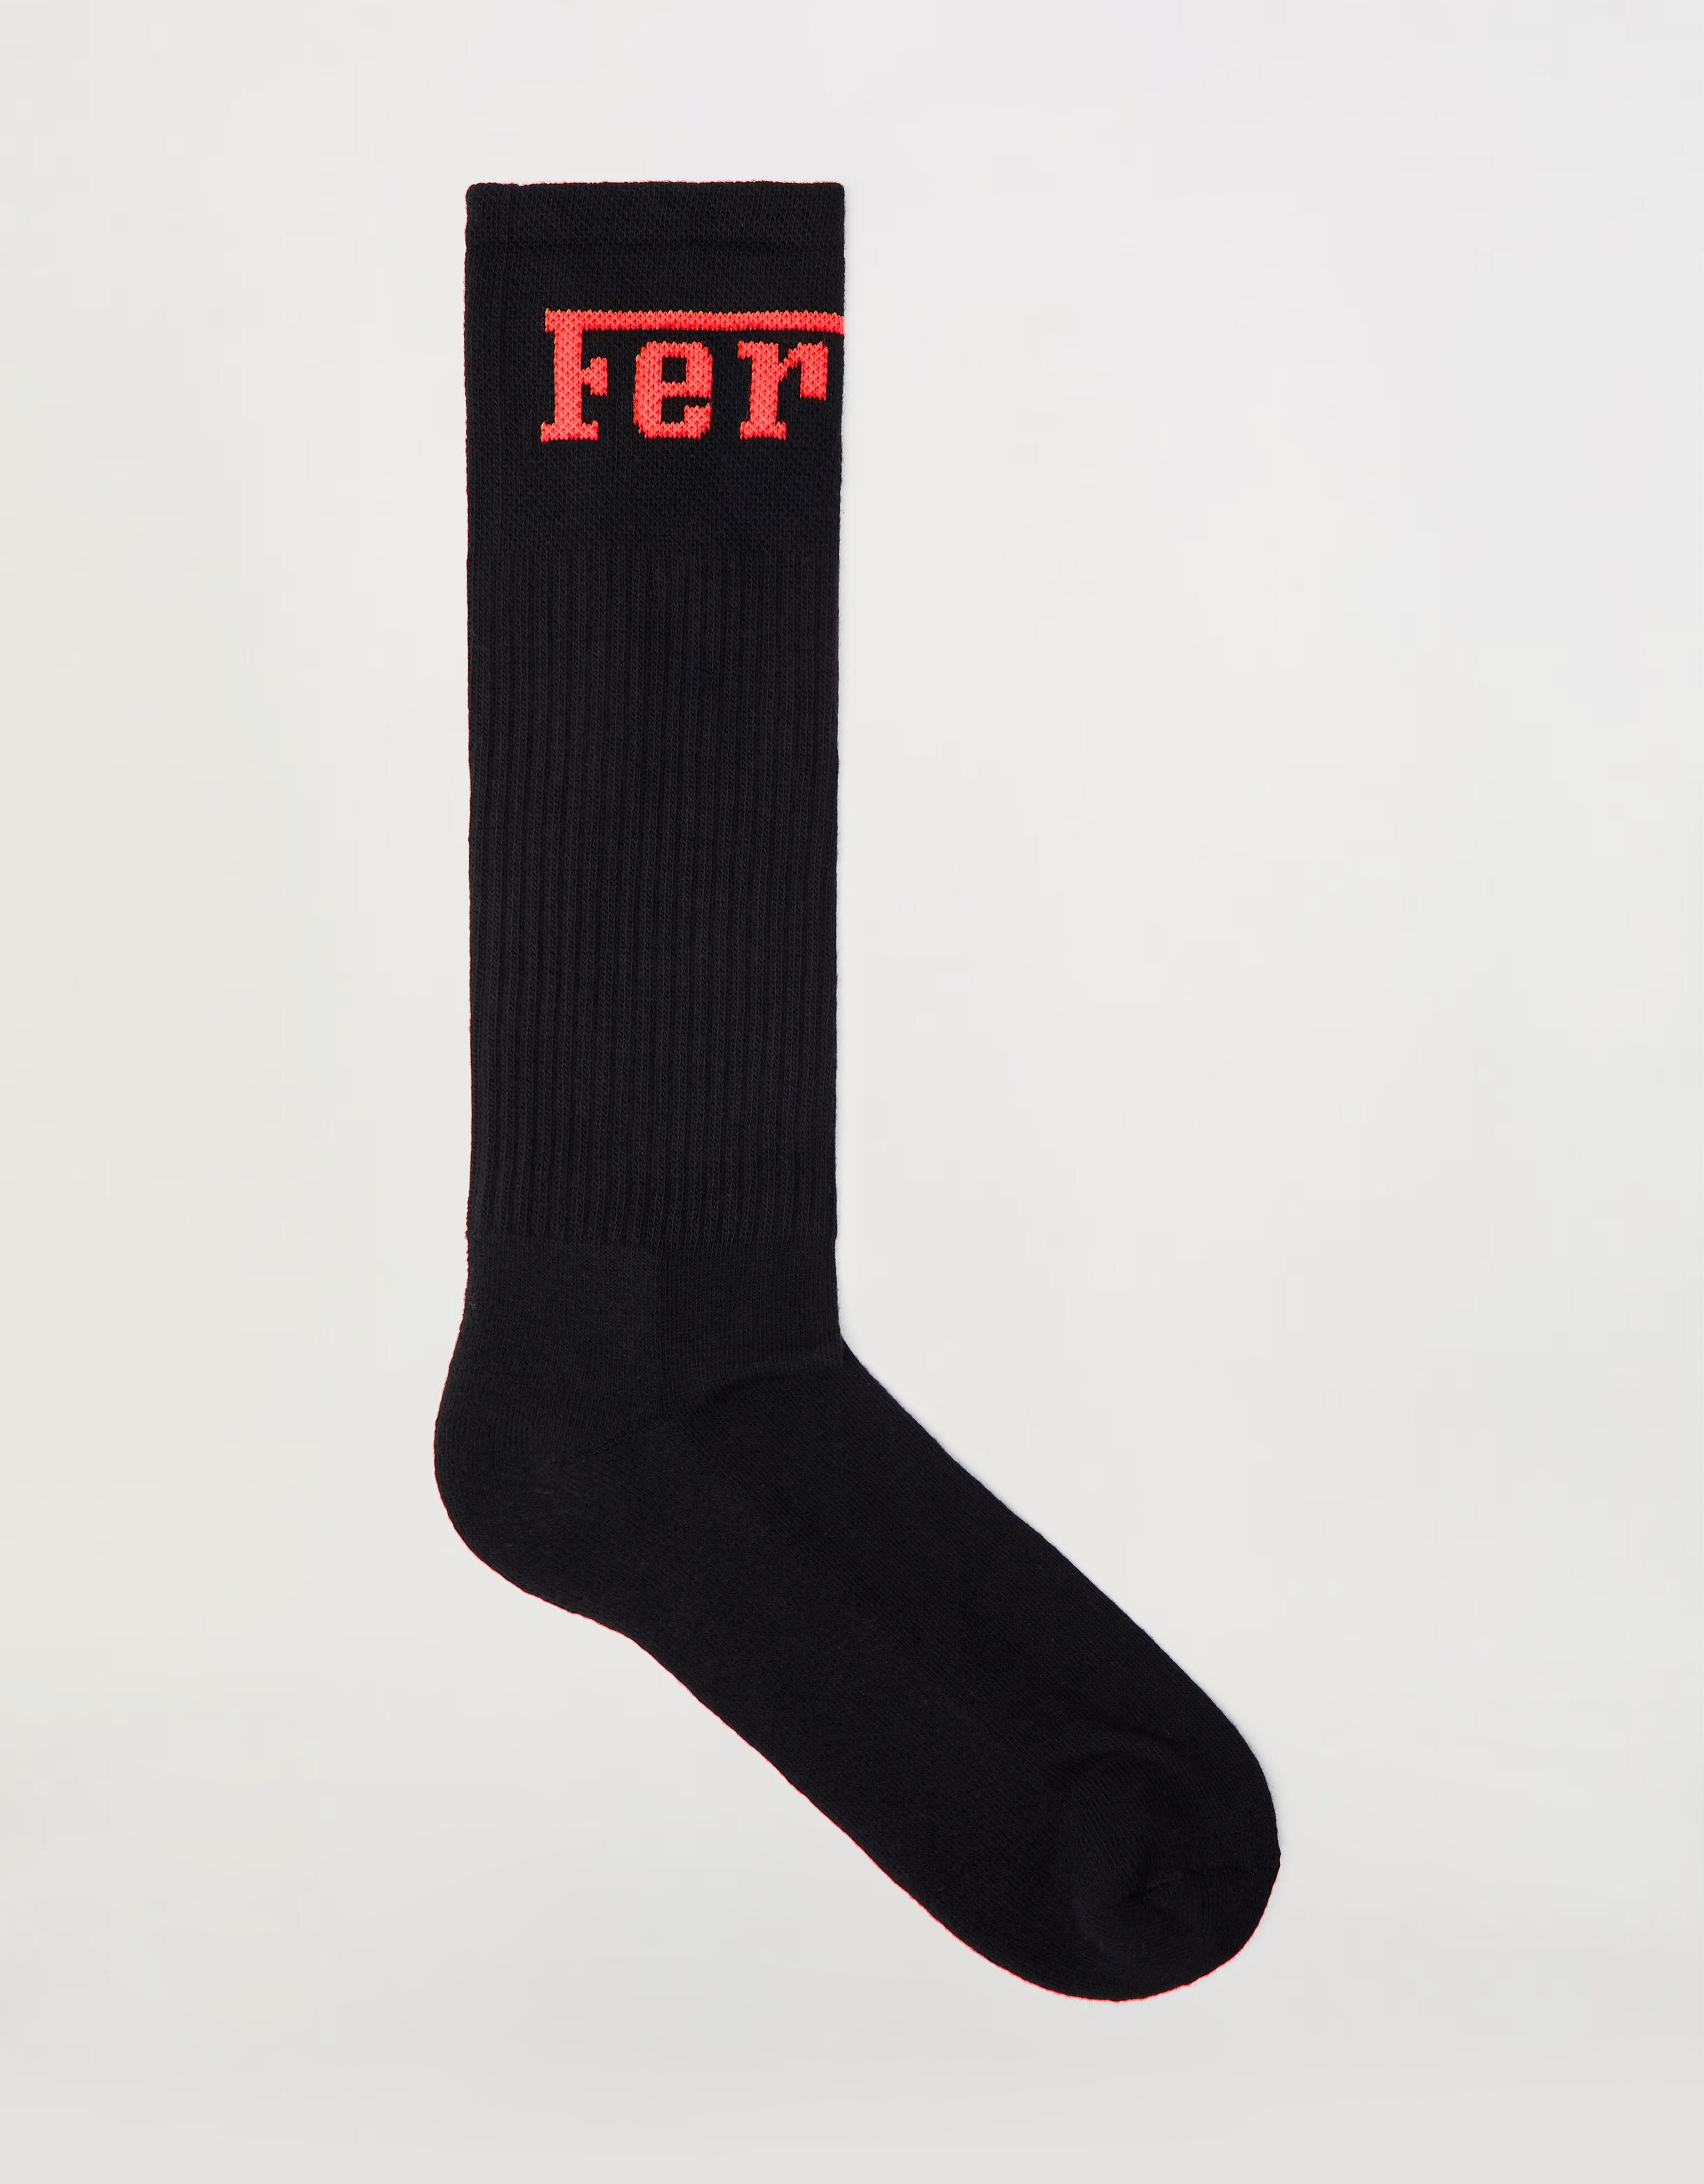 Ferrari Cotton blend socks with Ferrari logo Optical White 20815f